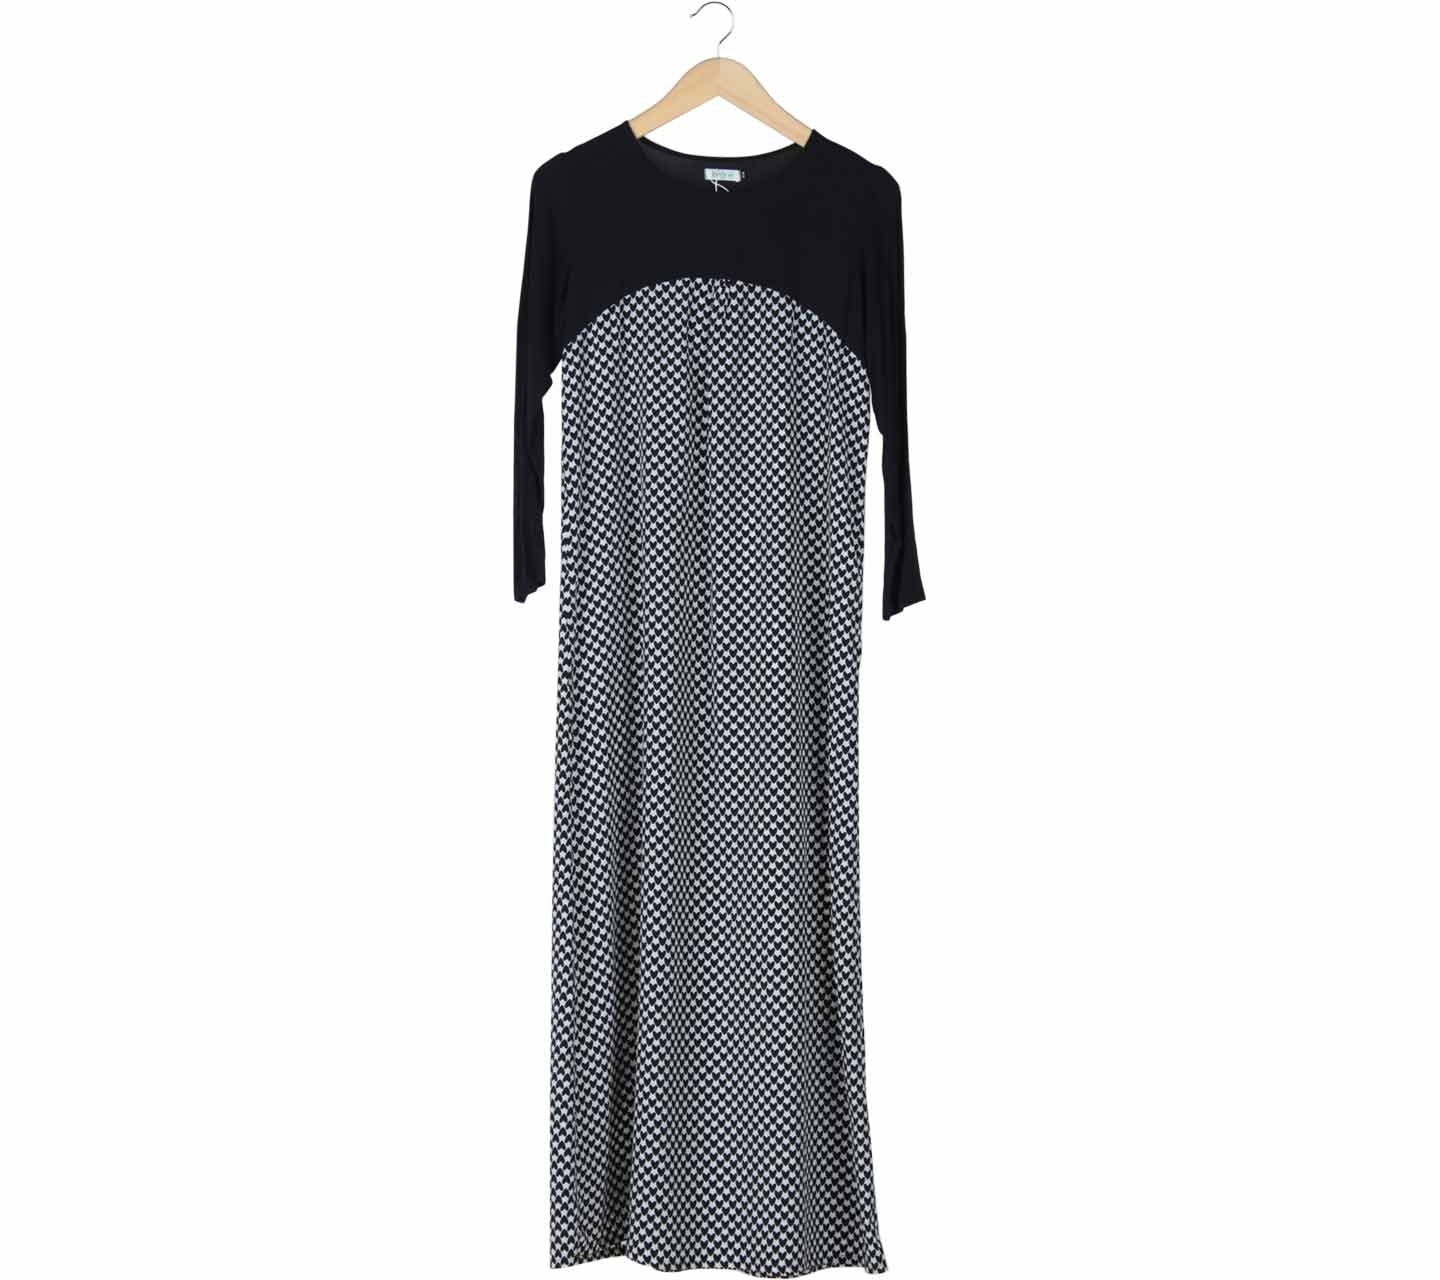 Biye Black And White Patterned Long Dress